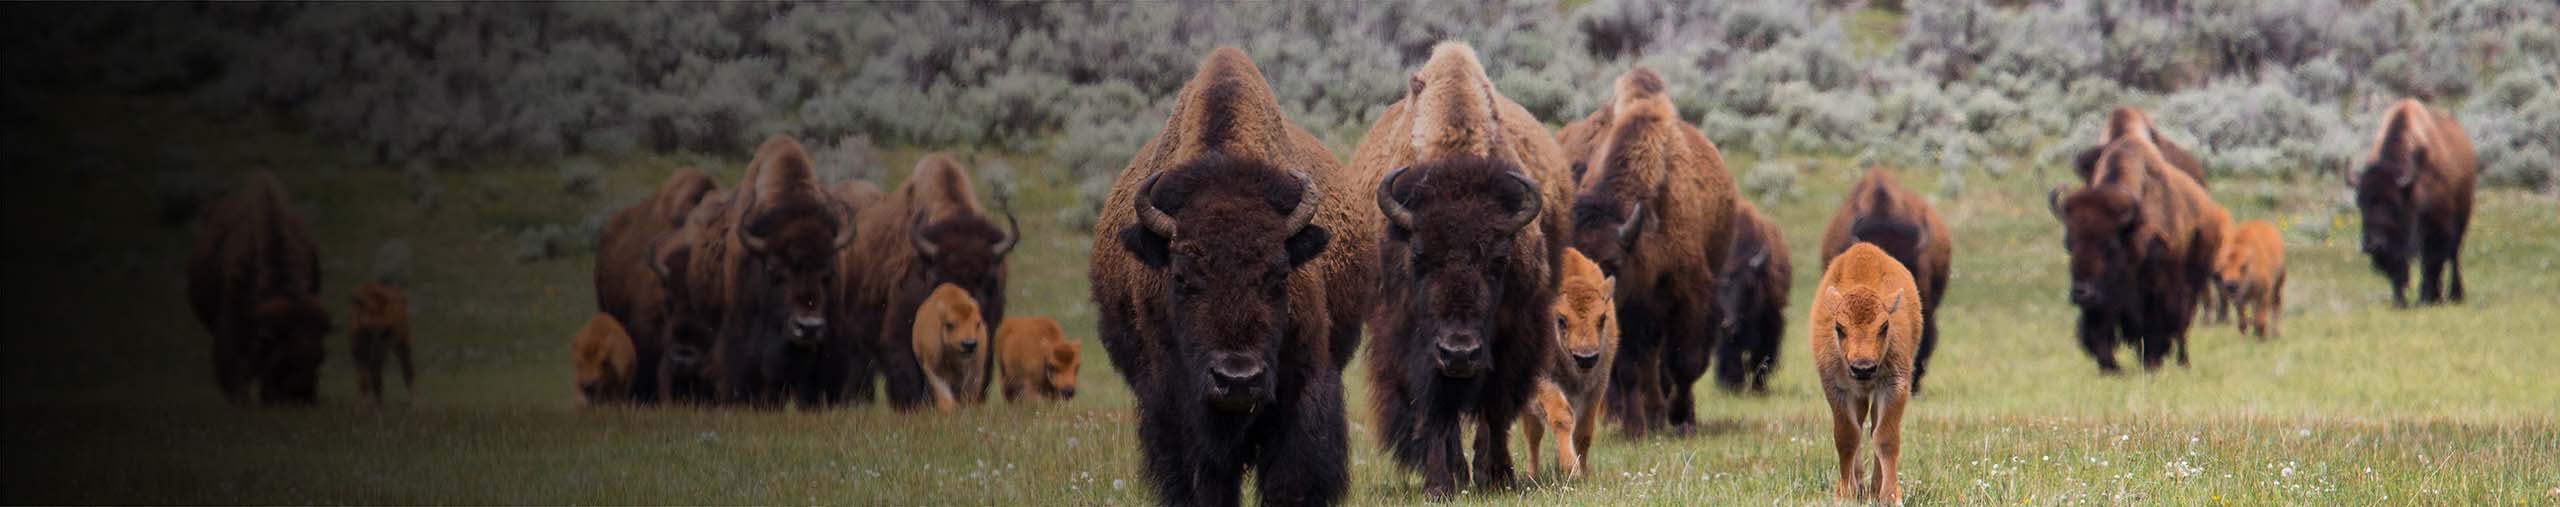 Yellowstone Mammals - Bison Munching Grass by Yellowstone Sound Library